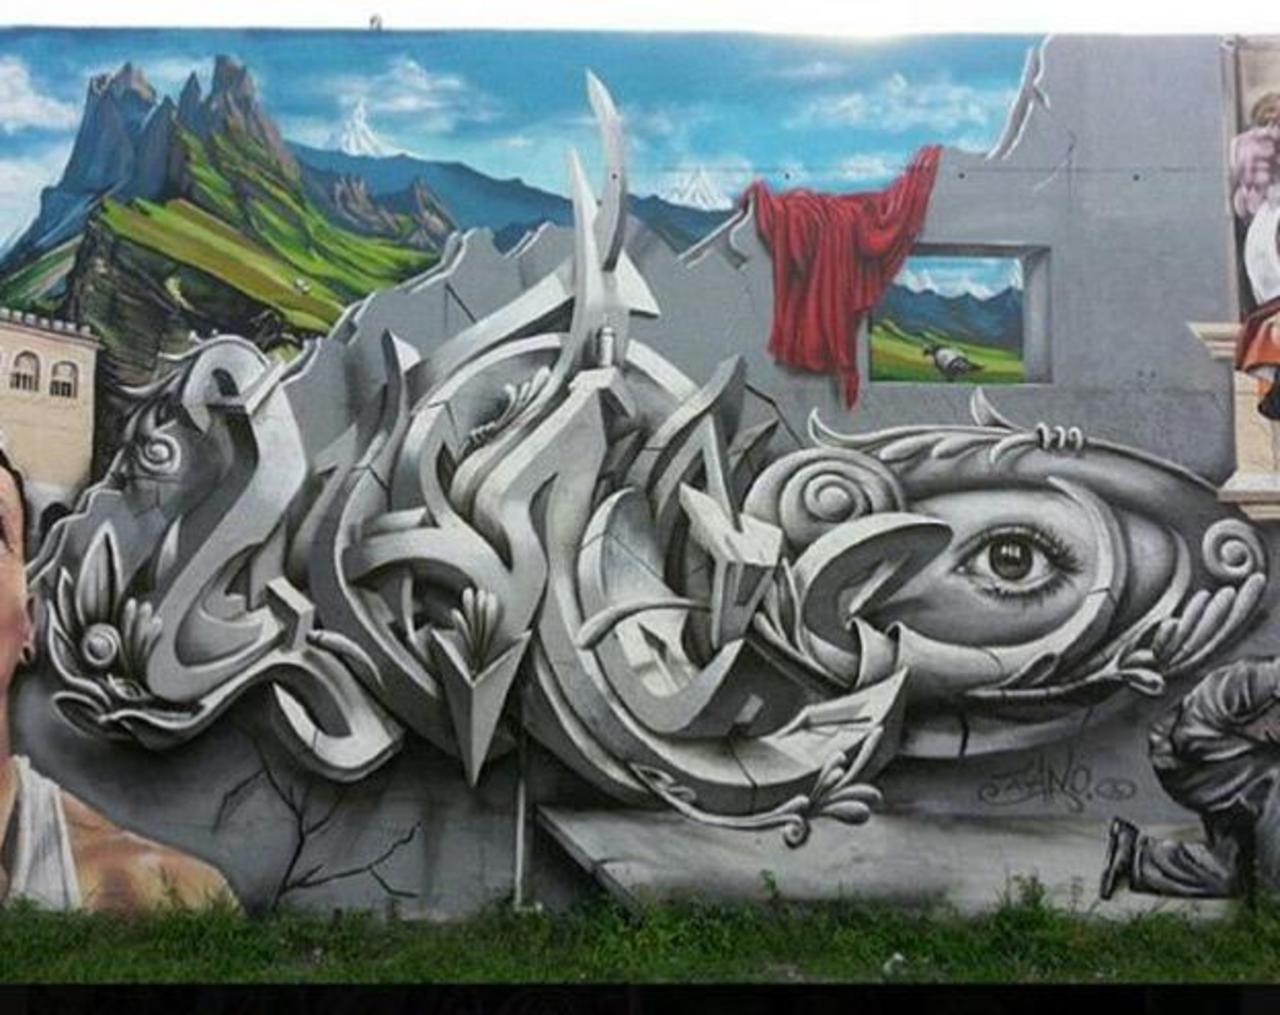 RT belilac "RT belilac "RT belilac "RT belilac "Street Art by Smog One

#art #mural #graffiti #streetart http://t.co/gcxi02JMUG""""